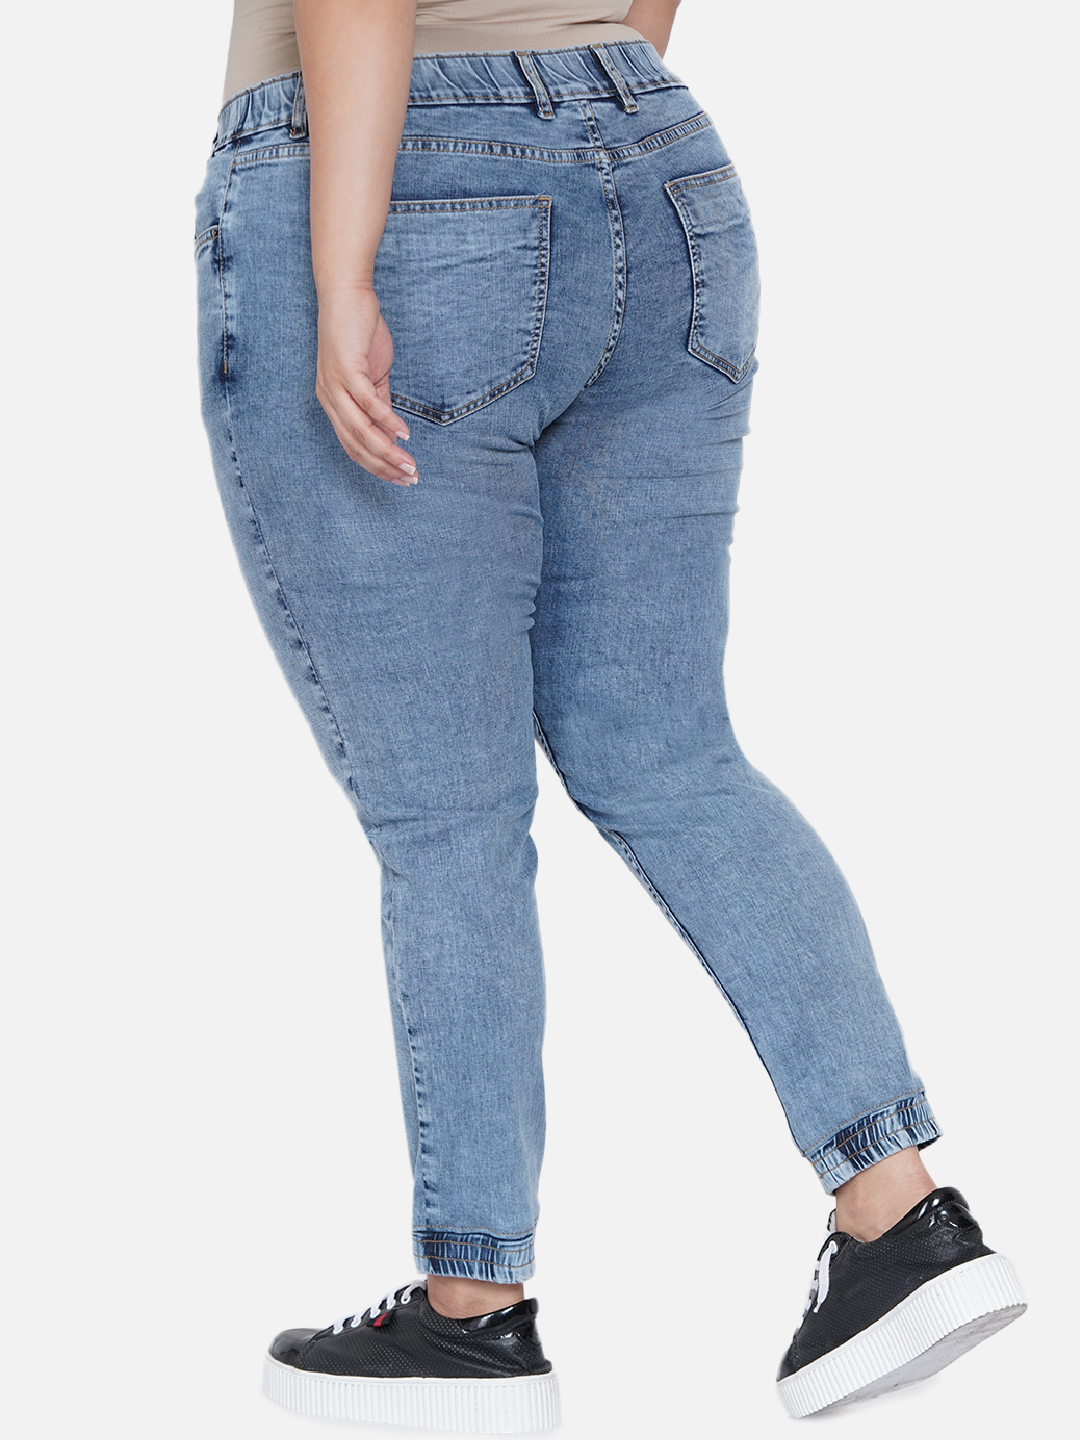 bottomwear_kiaahvi/jeans/KIAJ30/kiaj30-5.jpg